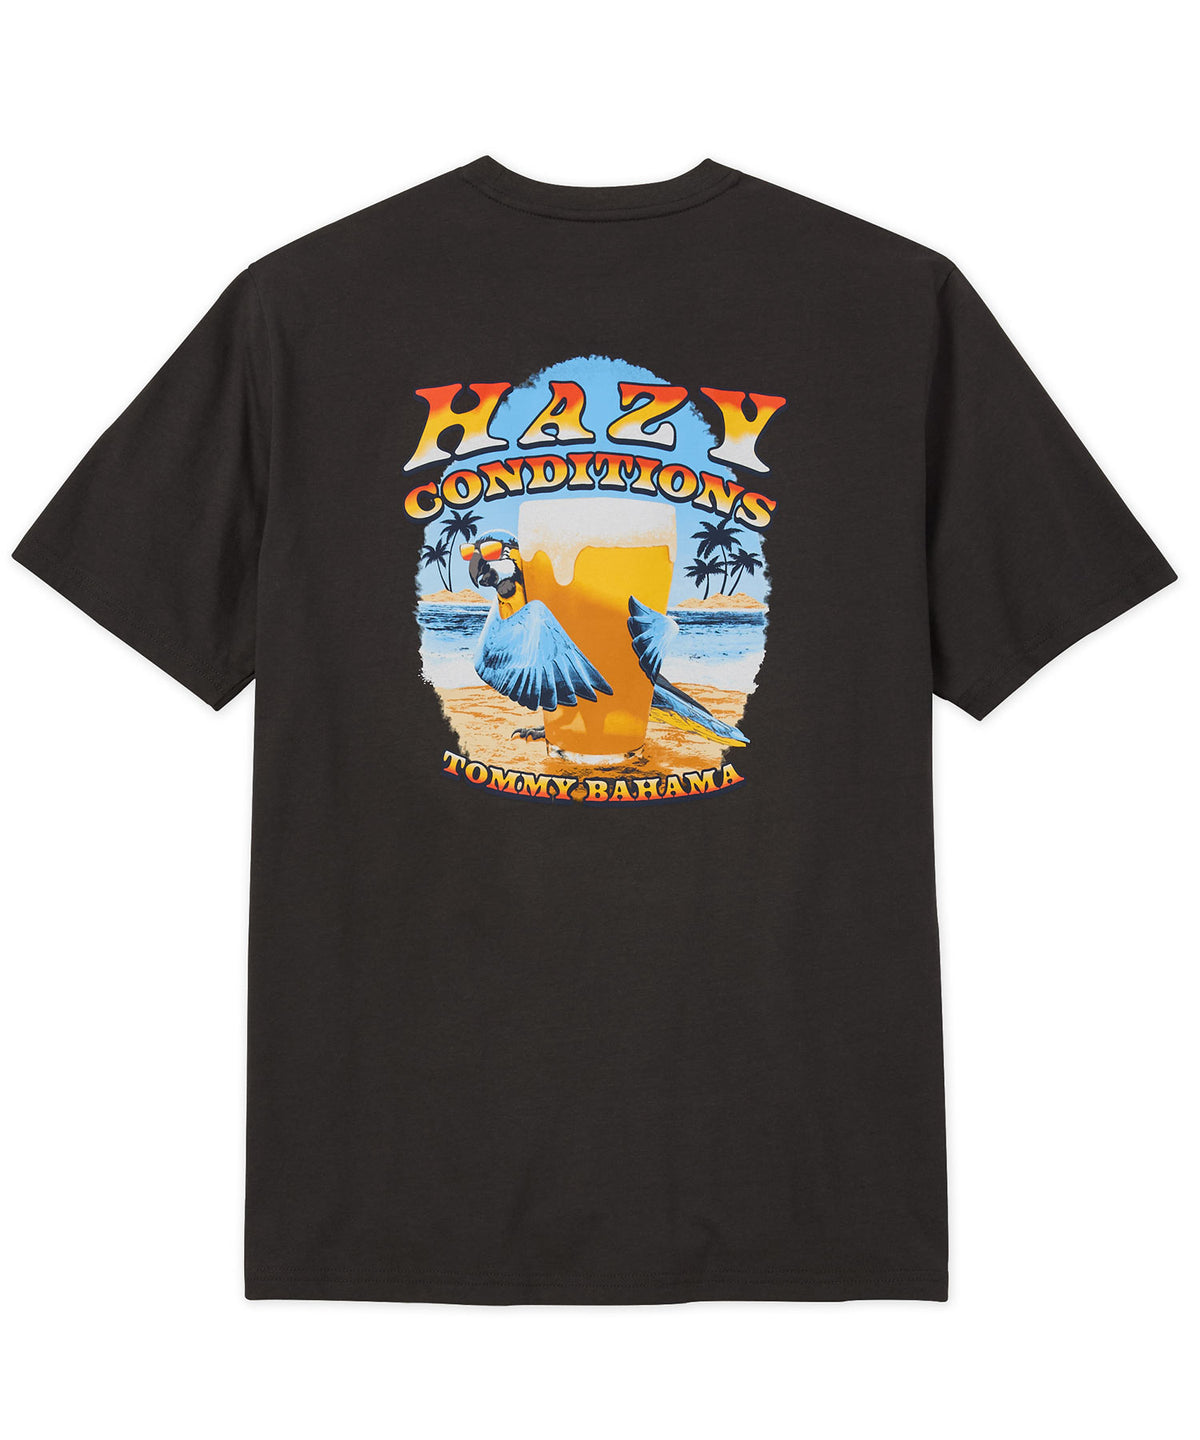 Tommy Bahama Short Sleeve 'Hazy Conditions' Crew Neck T-Shirt, Big & Tall